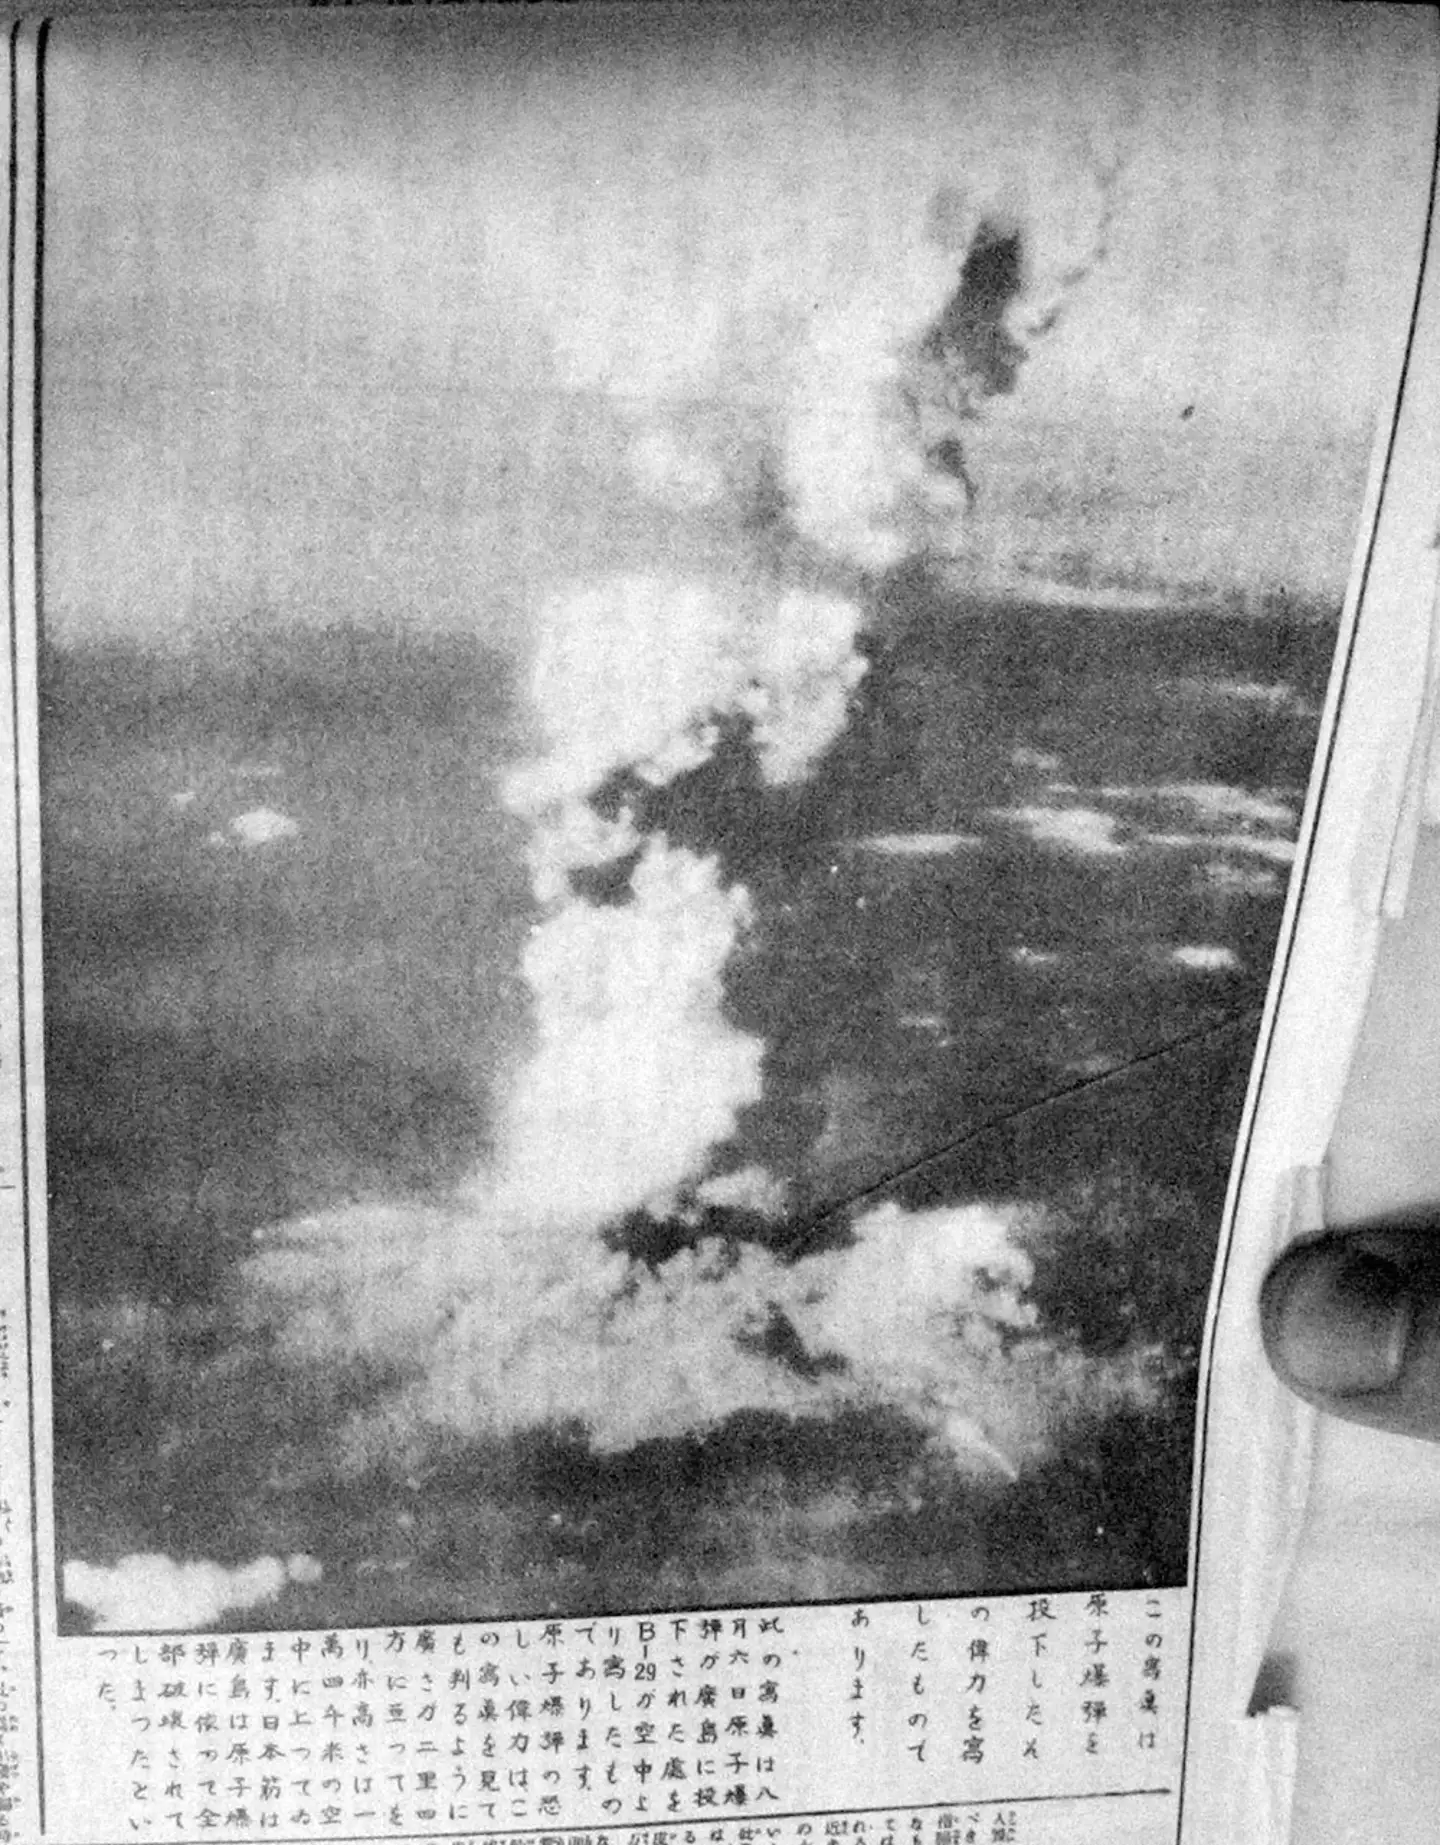 The leaflet dropped on Nagasaki.